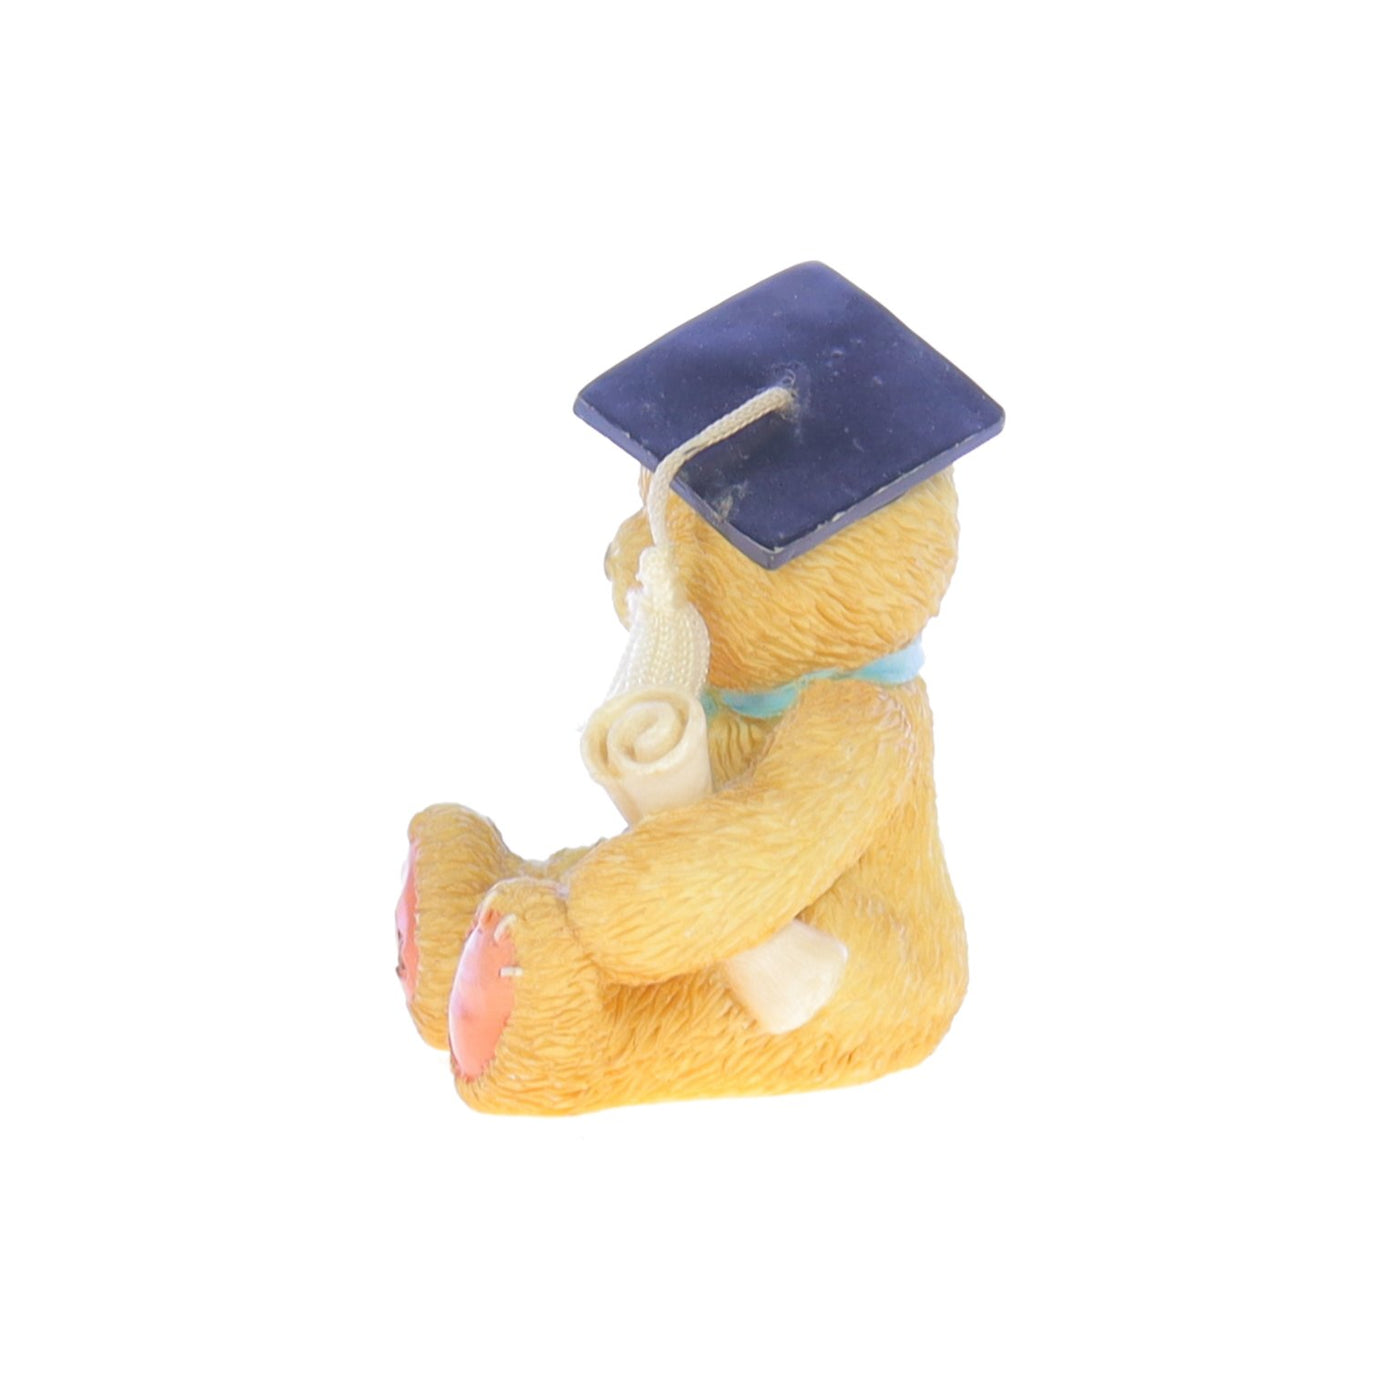 Cherished Teddies by Priscilla Hillman Resin Figurine Graduation Bear with Diploma_